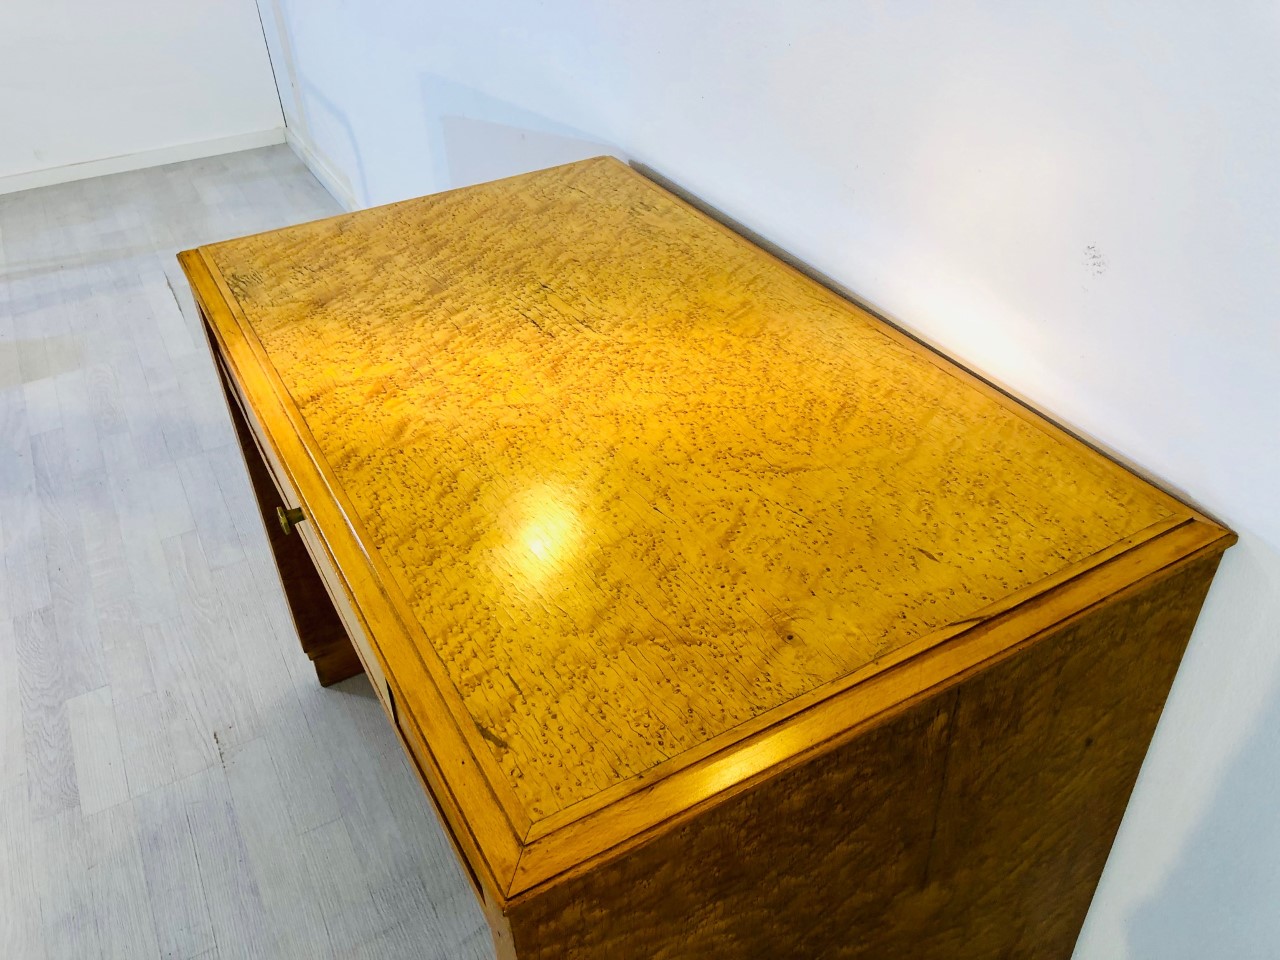 1930s Art Deco Desk Made Of Birdseye Maple Original Antique